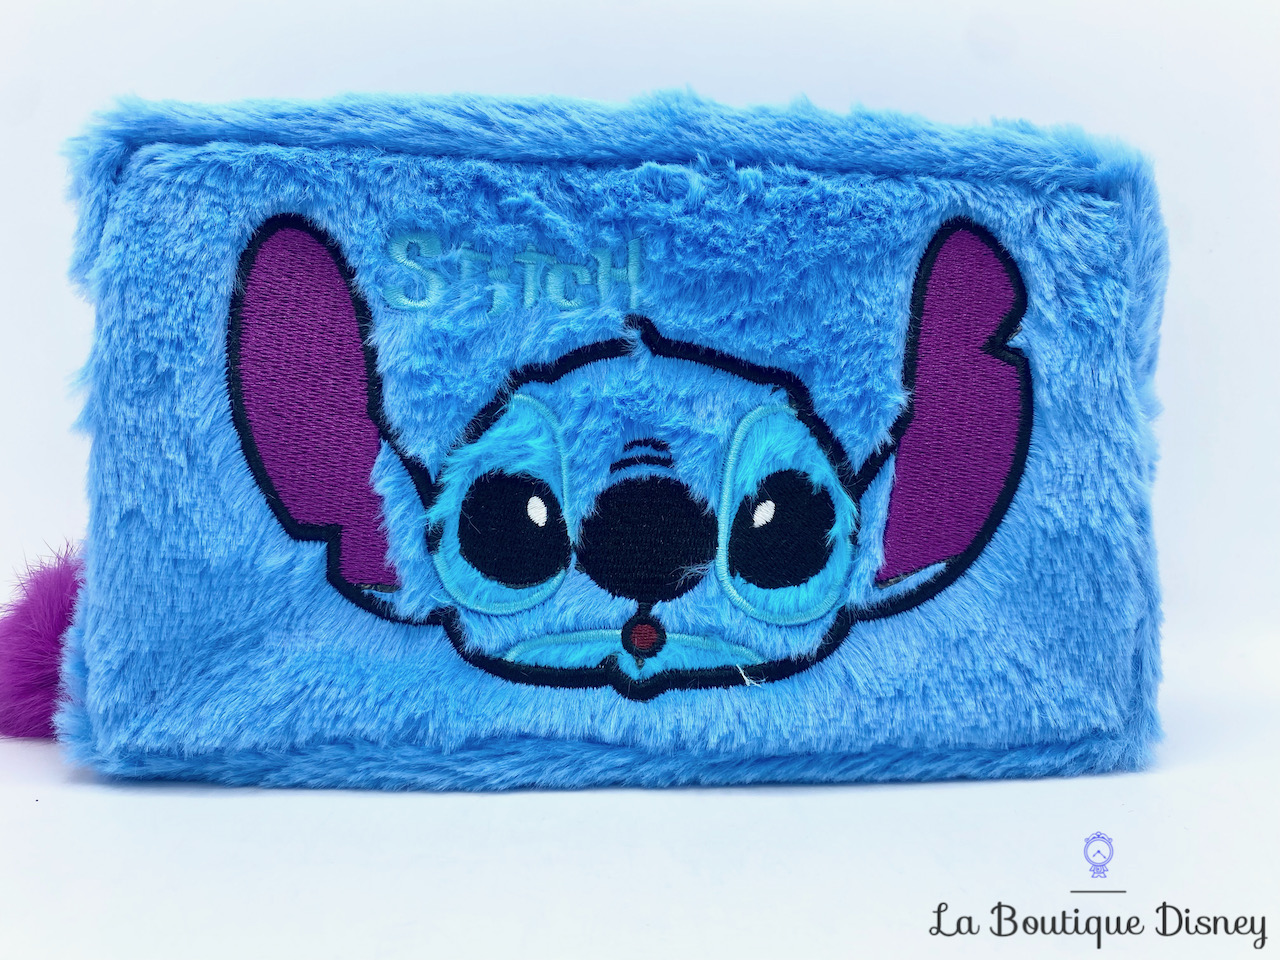 Pochette Stitch Disney F&F Stores fourrure bleu trousse maquillage